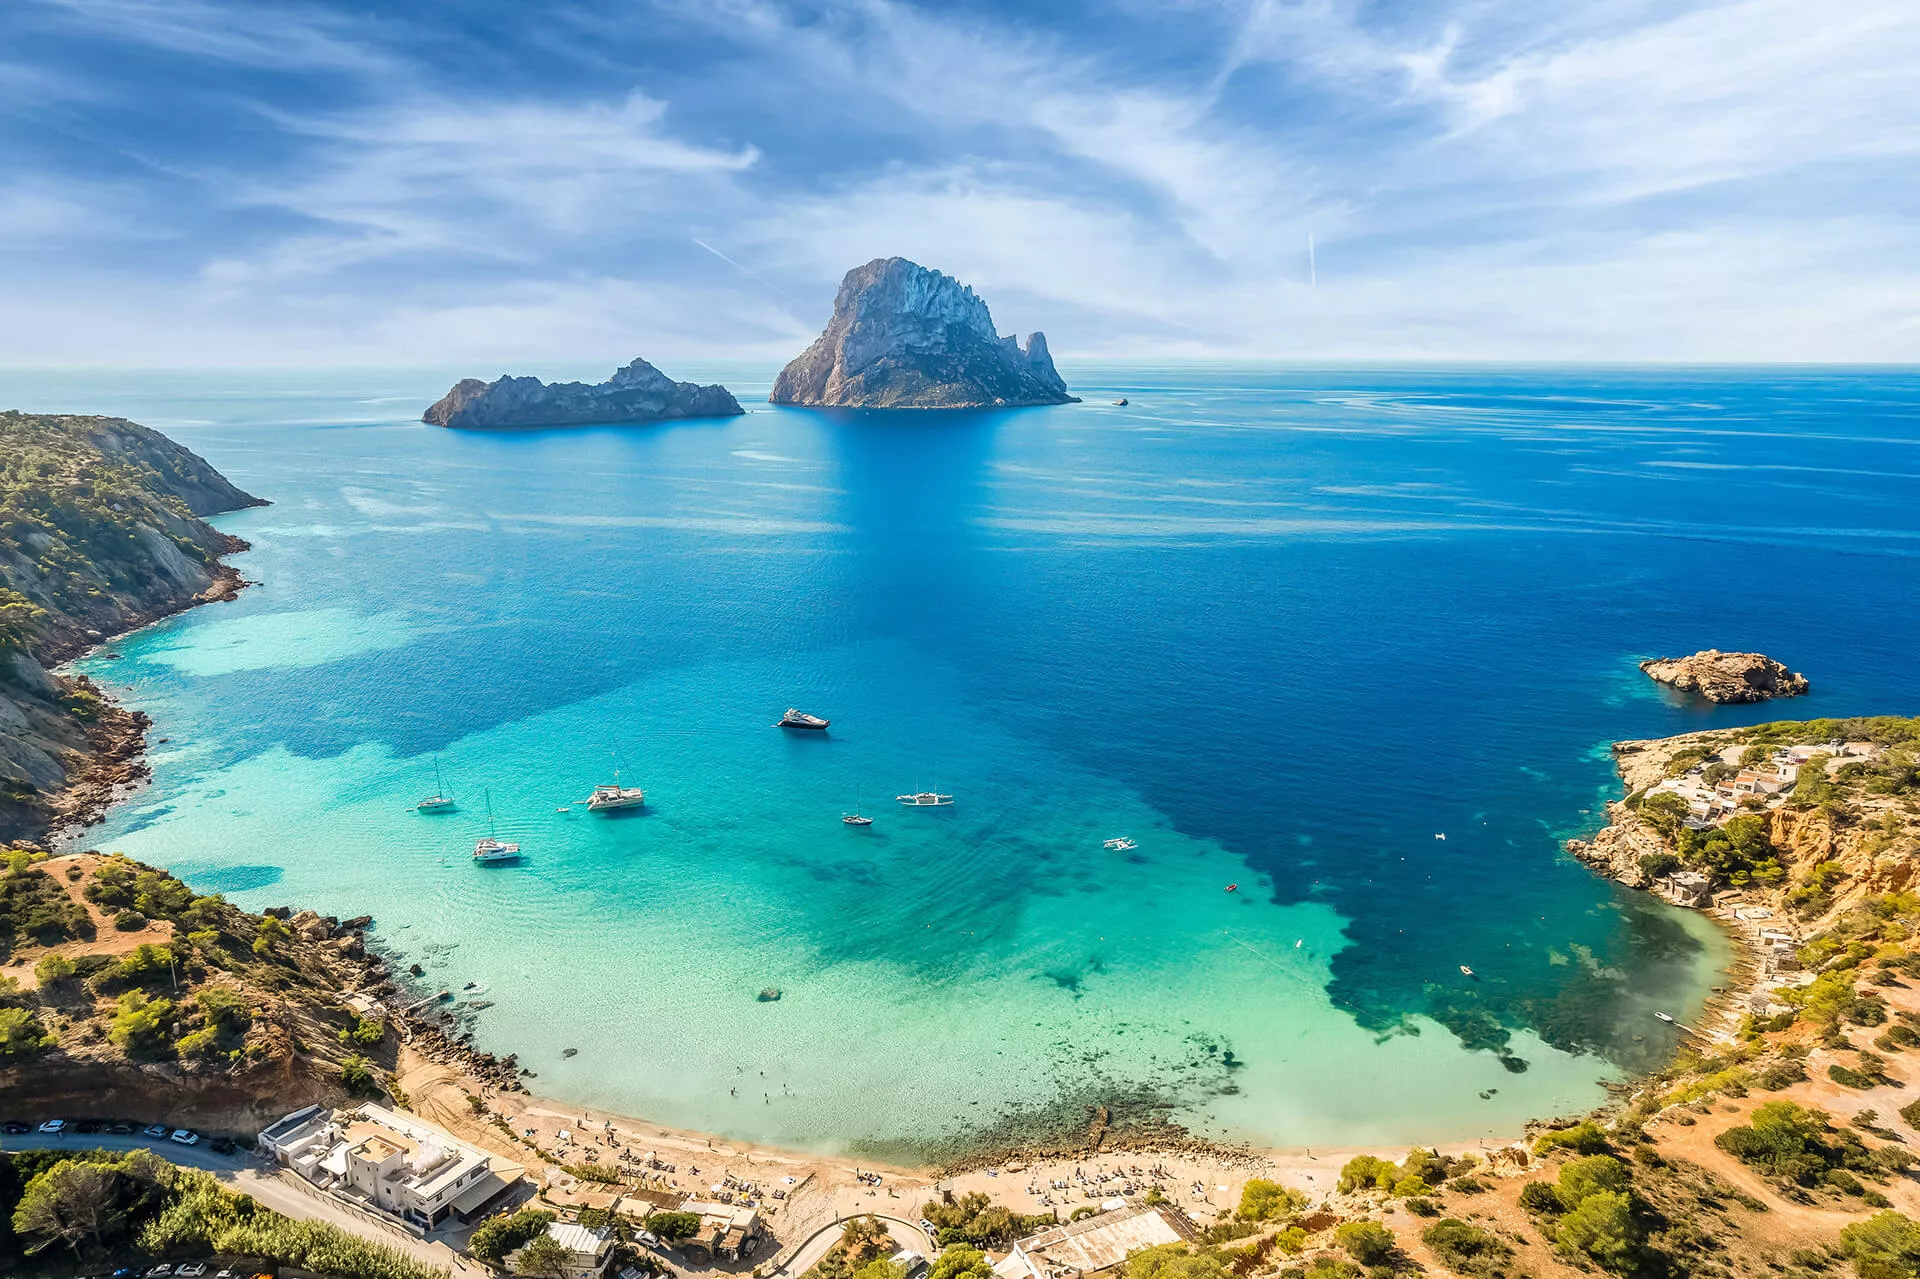 Urlaub am Meer - Pauschalreiseurlaub mit AurumTours - Cala d'Hort, Ibiza